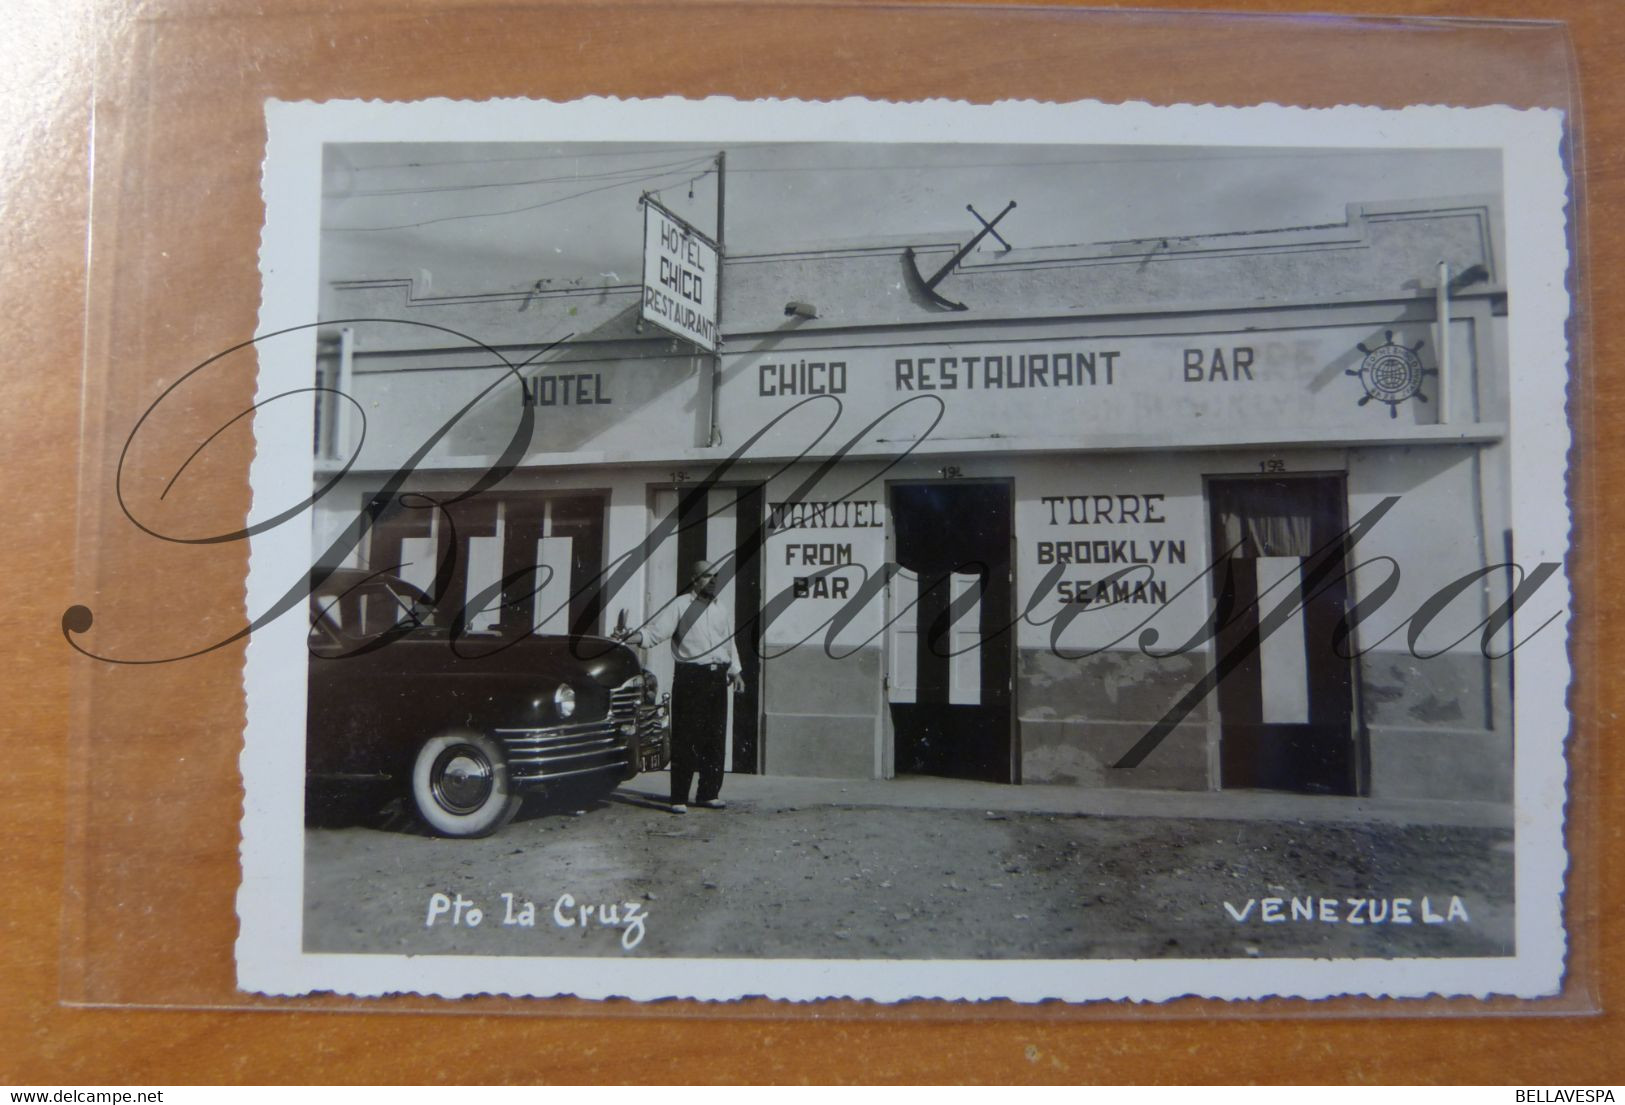 Venuzuela. Hotel Bar Restaurant Chico. Manule Turre. Brooklyn Brotherhood Seaman.  Porto La Cruz. RPPC 1952 - Venezuela